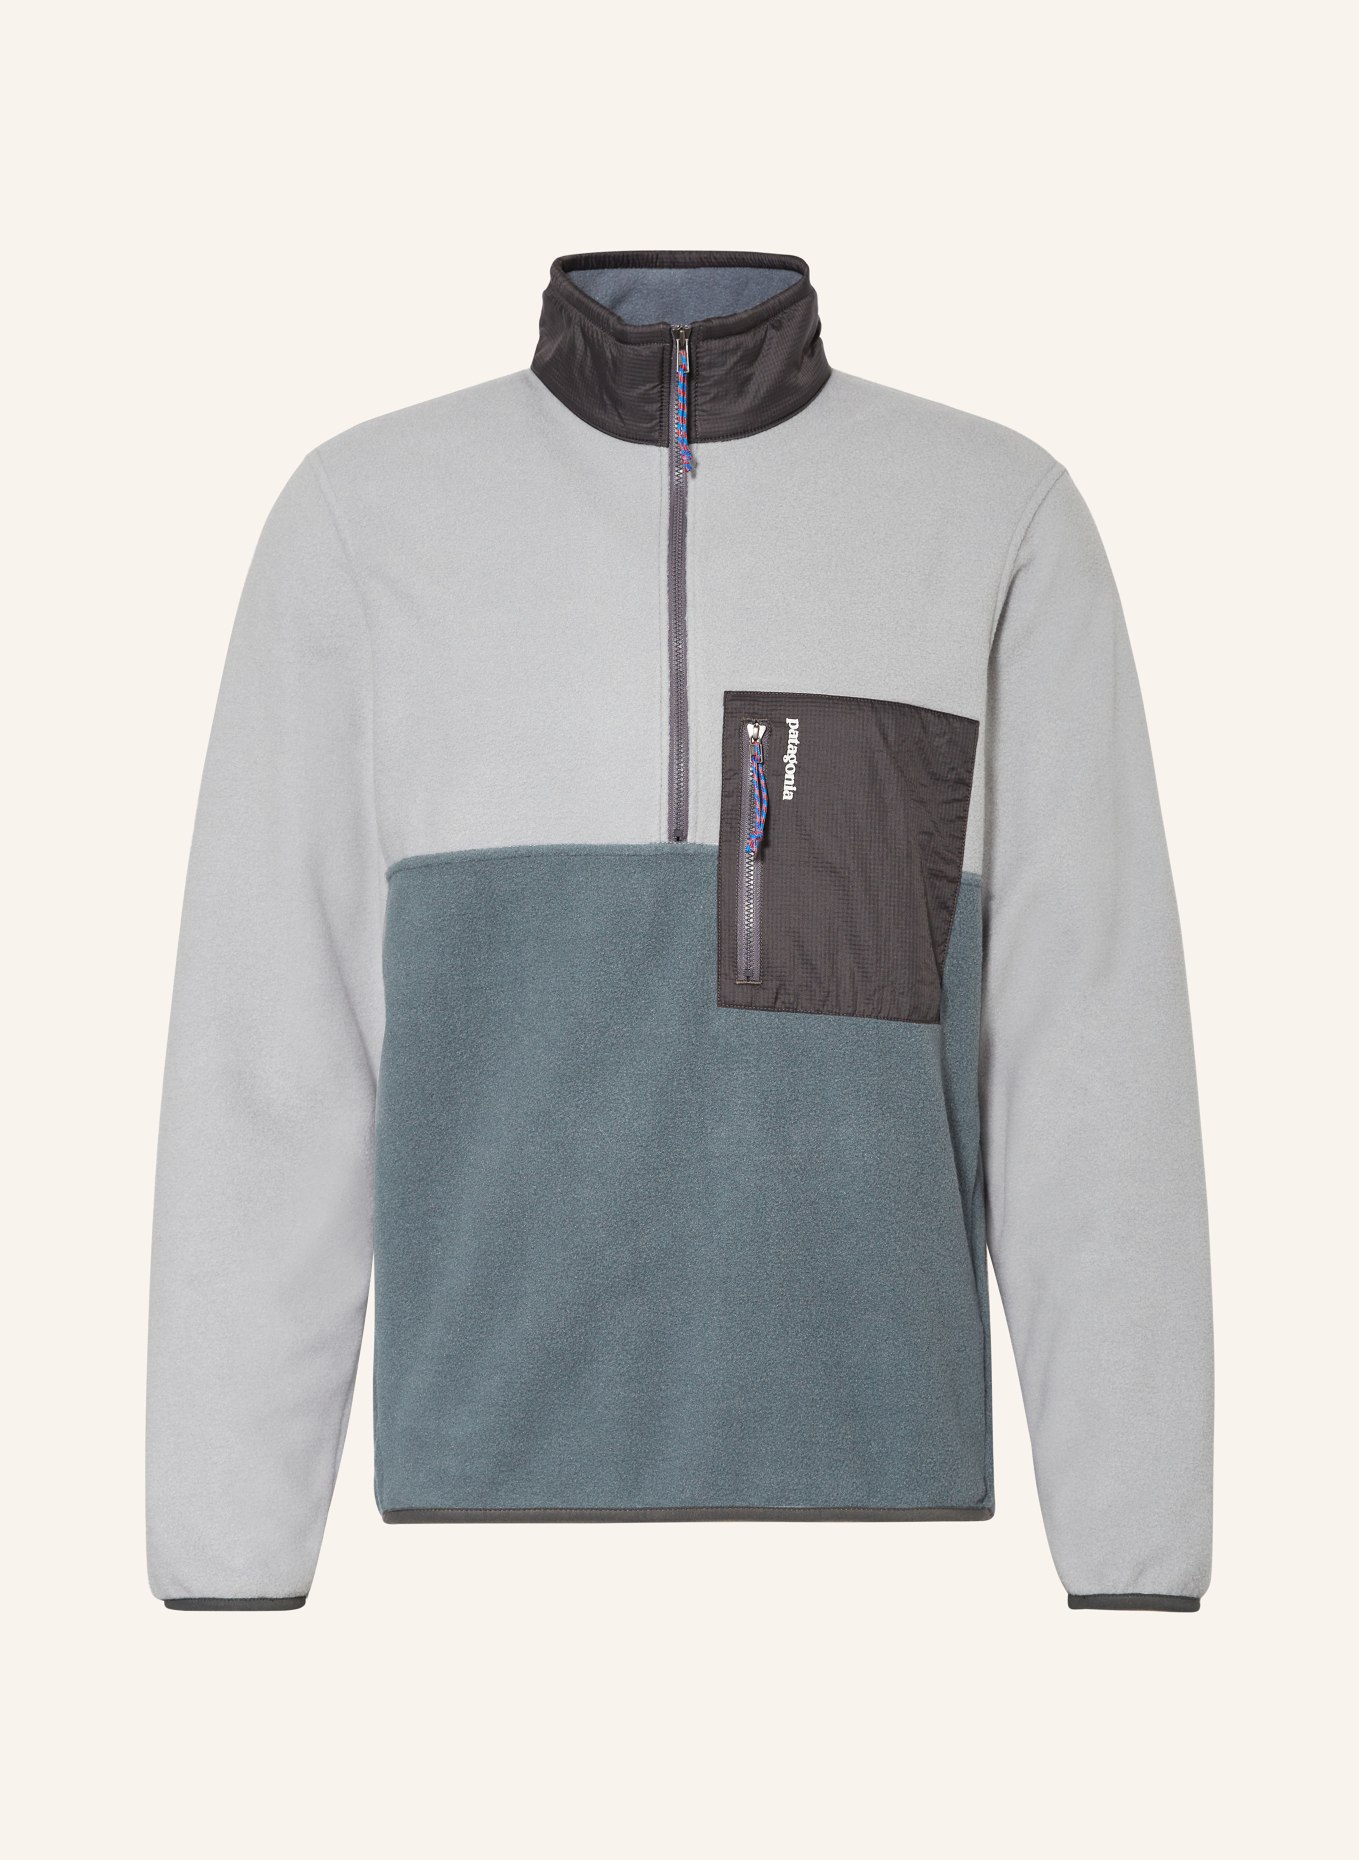 patagonia Fleece half-zip sweater, Color: TEAL/ LIGHT GRAY/ DARK GRAY (Image 1)